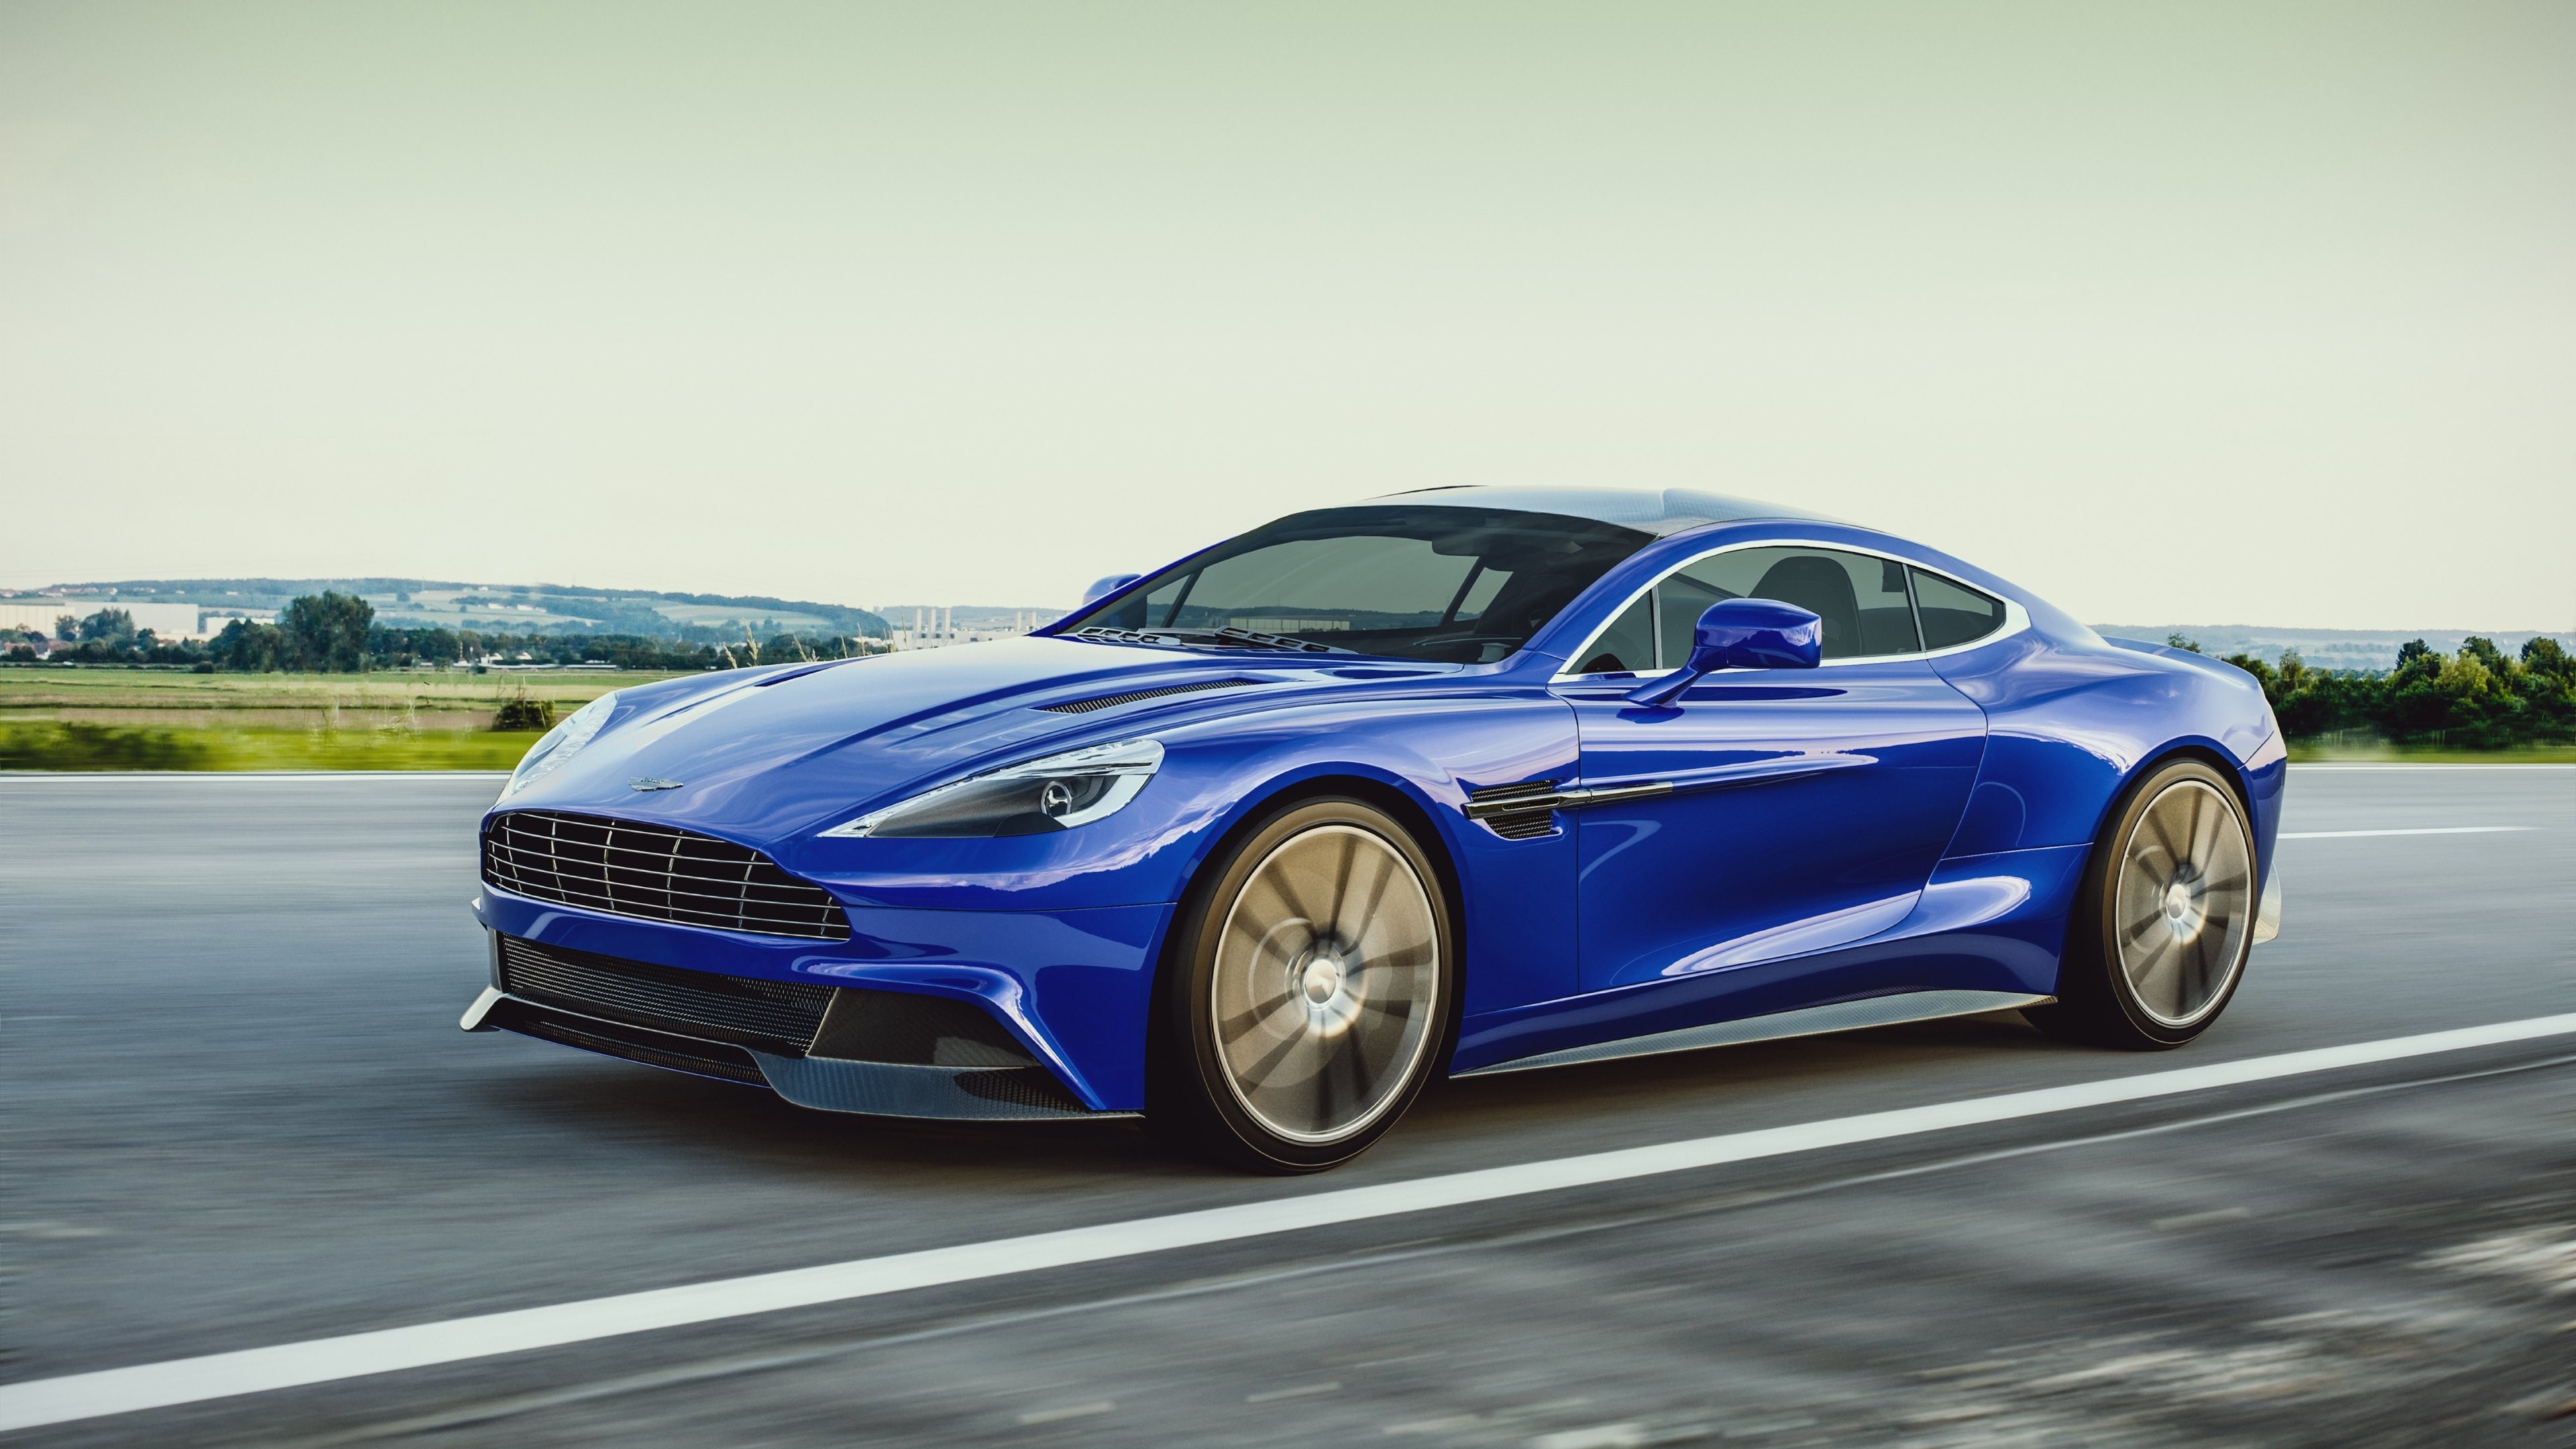 Aston Martin DBS, Blue sports car, Performance and luxury, Aston Martin design, 3840x2160 4K Desktop